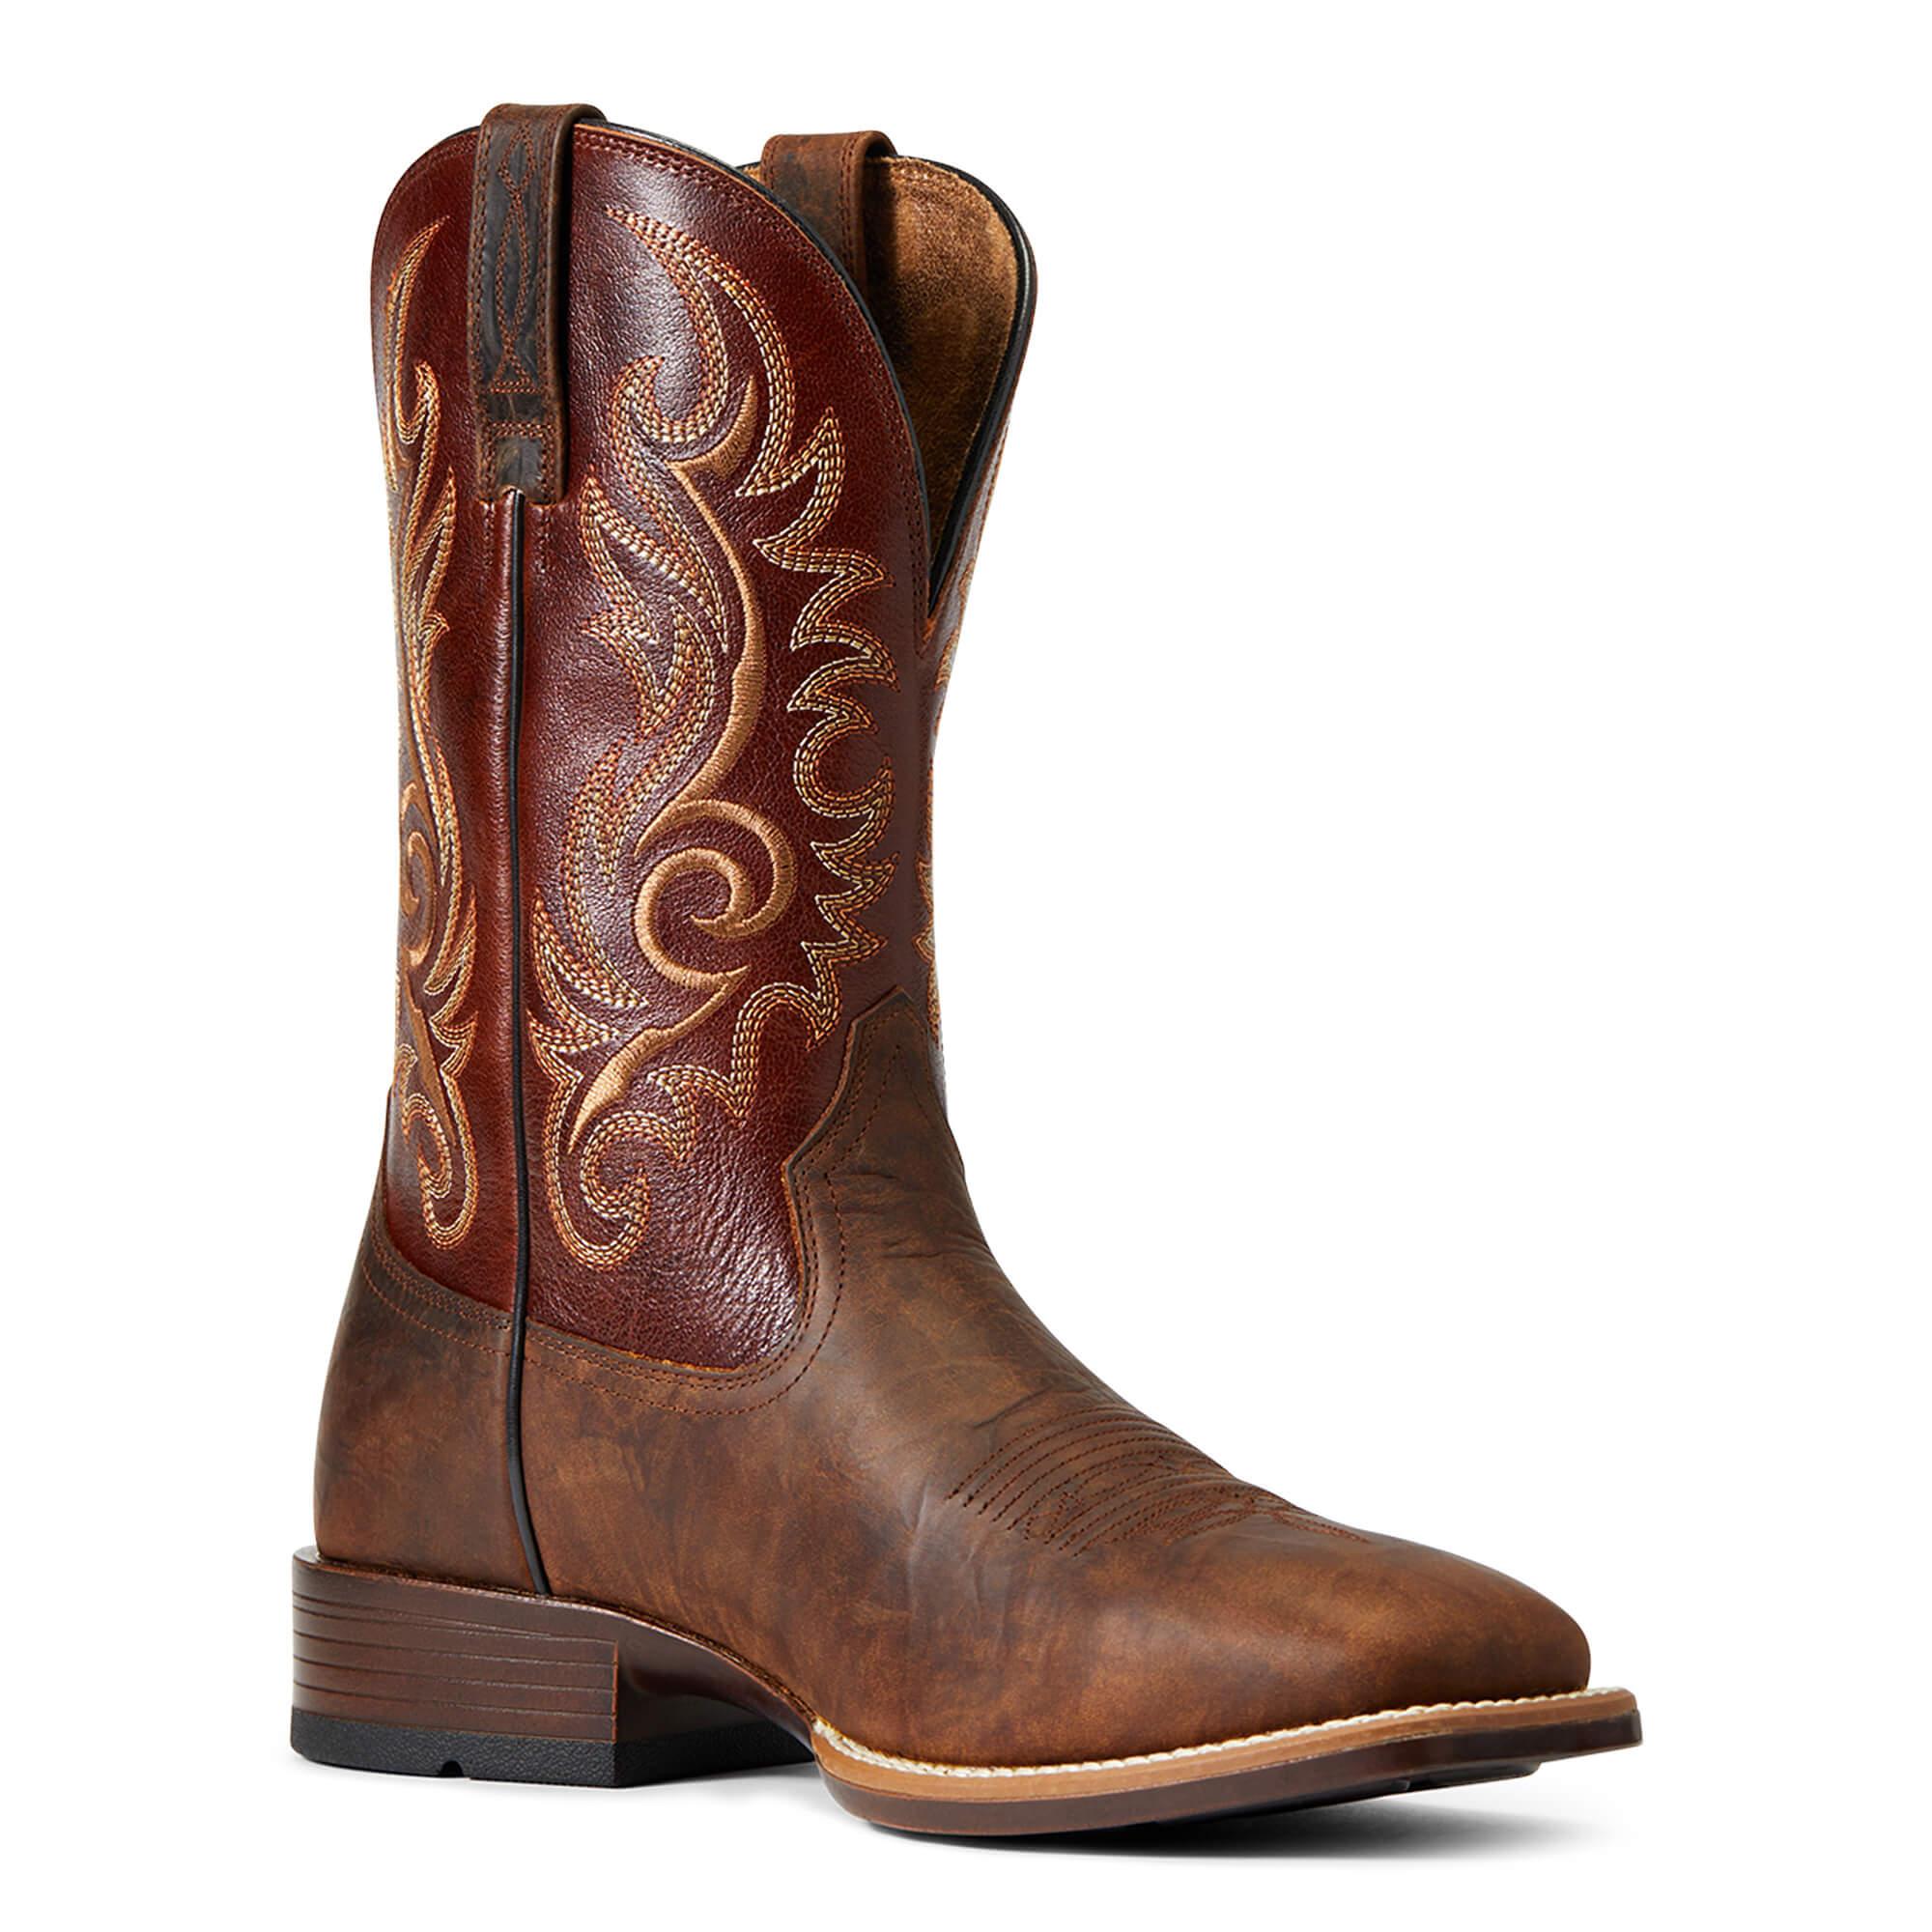 Ariat Lasco ultra Western boot for men